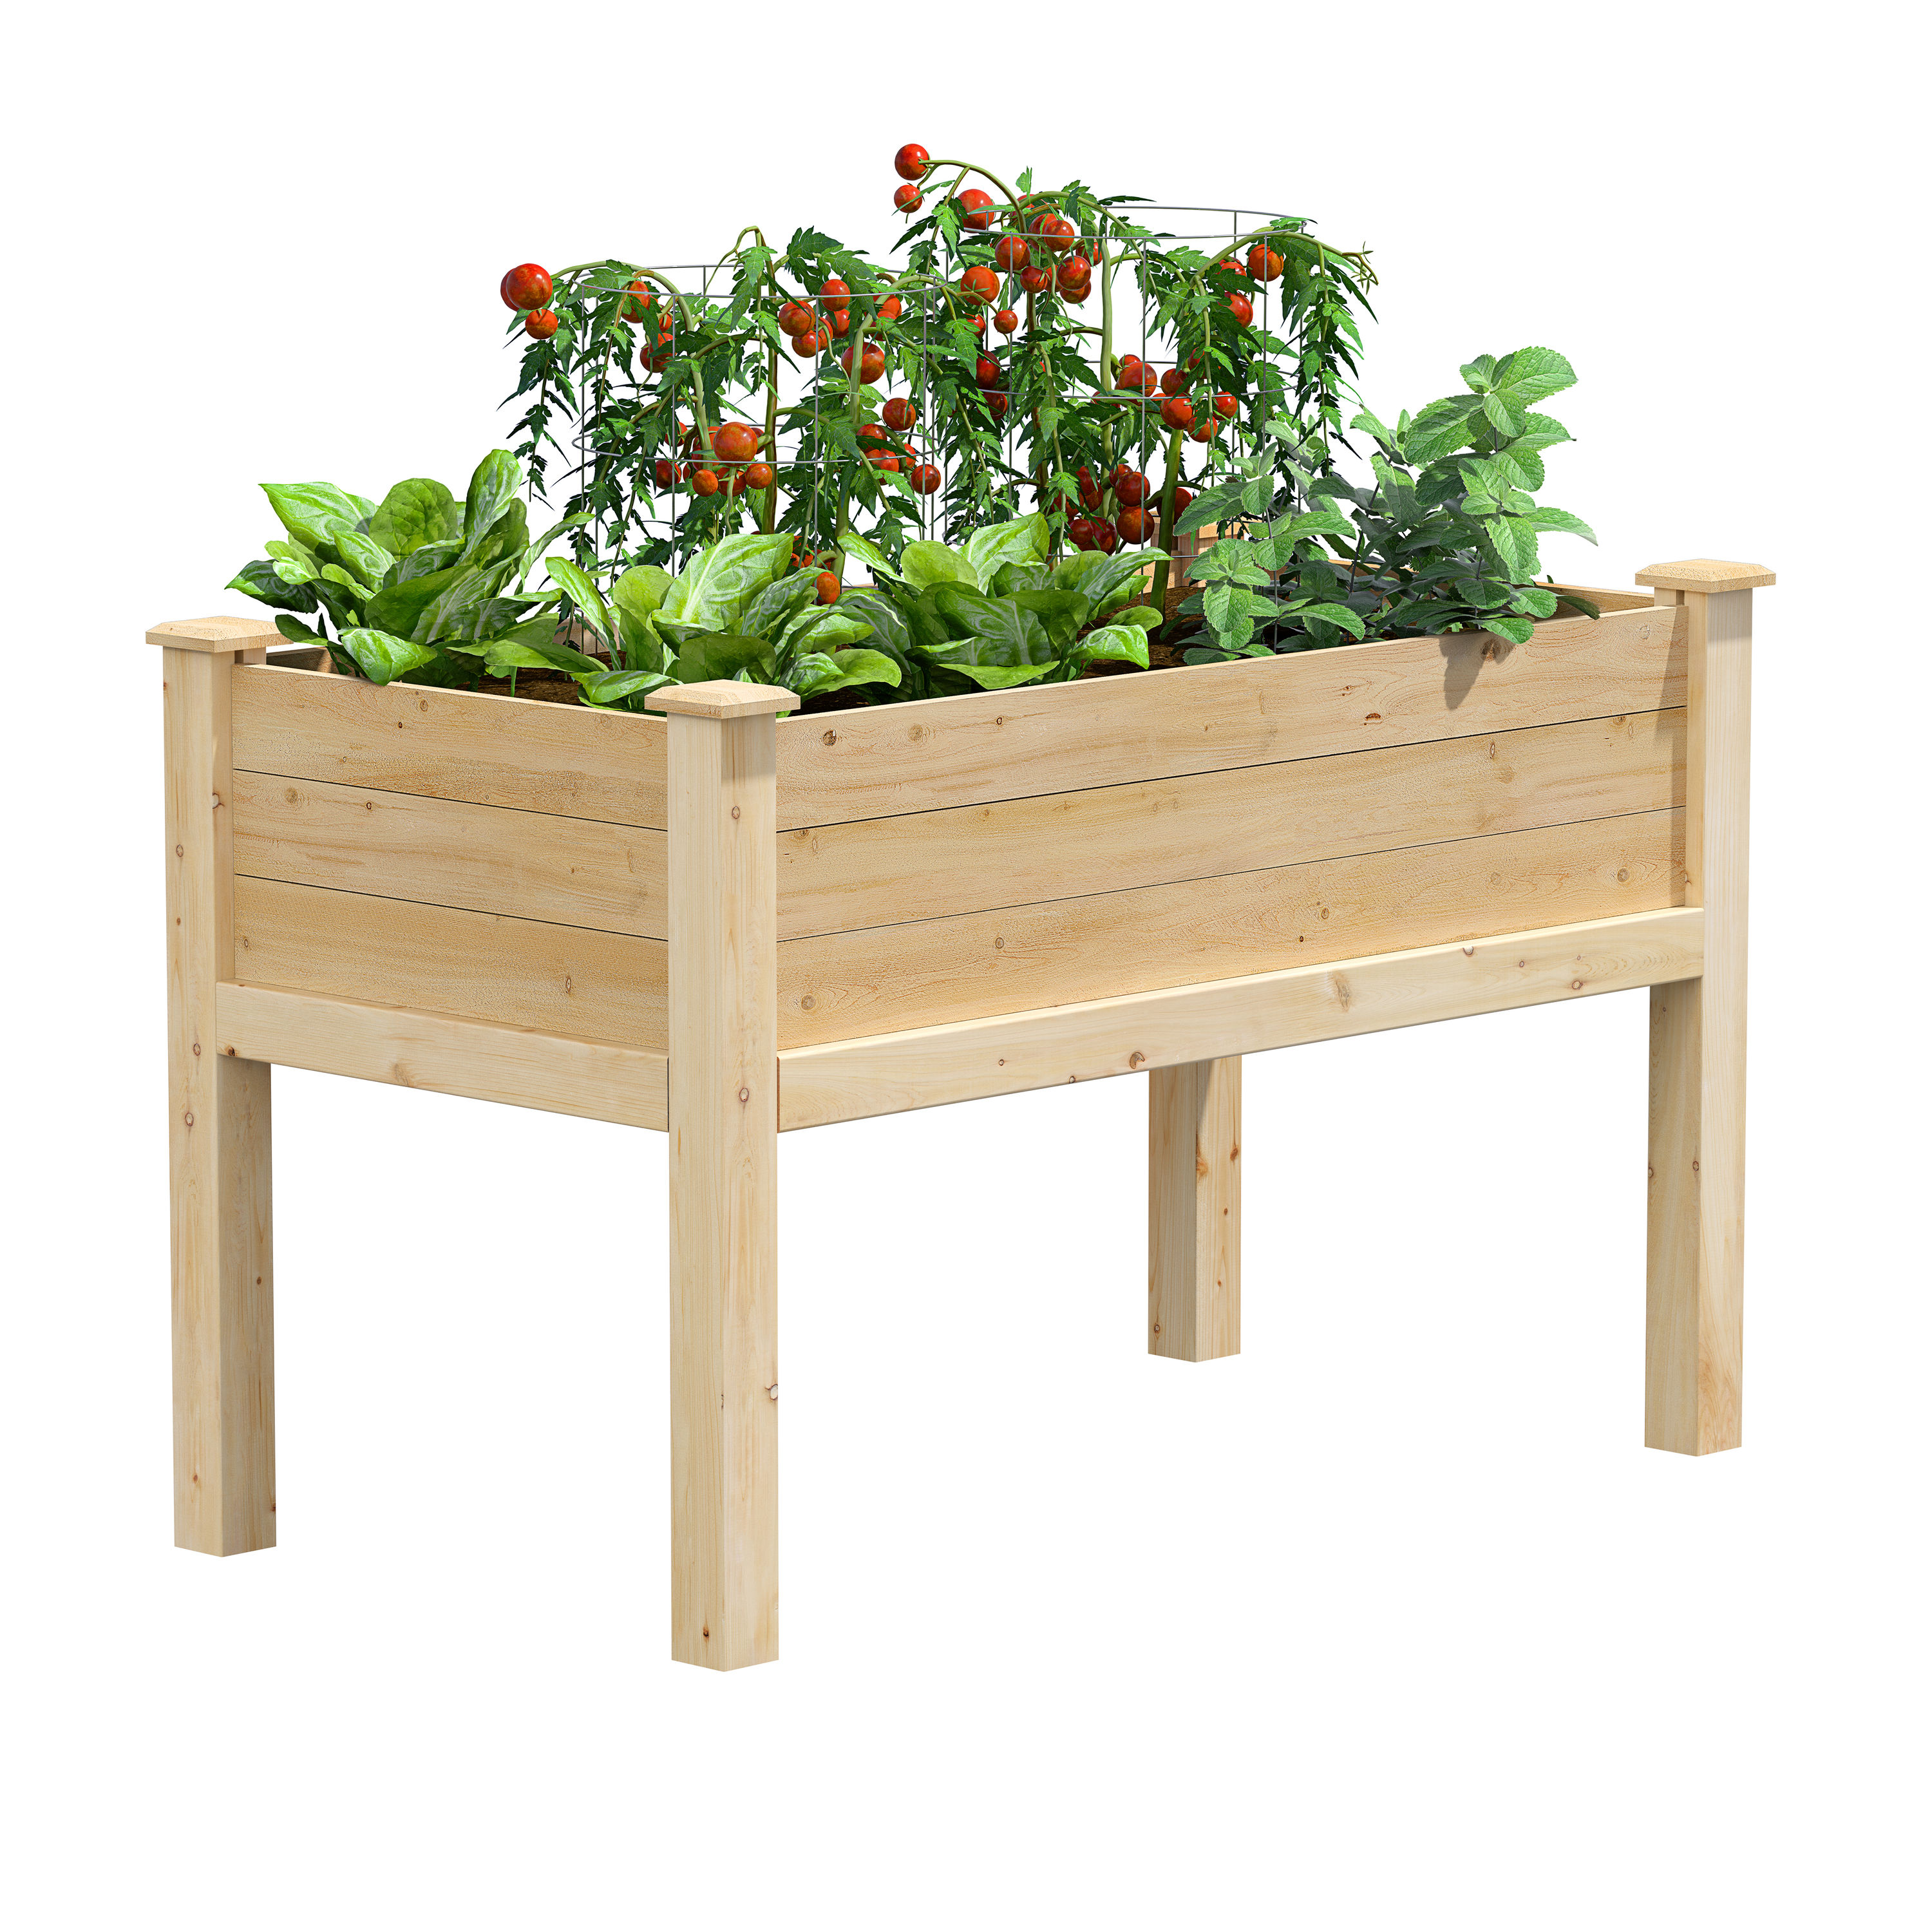 GOOGIC Garden Bed Kit Wooden Garden Box 8 FT Wooden Planter Box kit for Backyard and Patio 